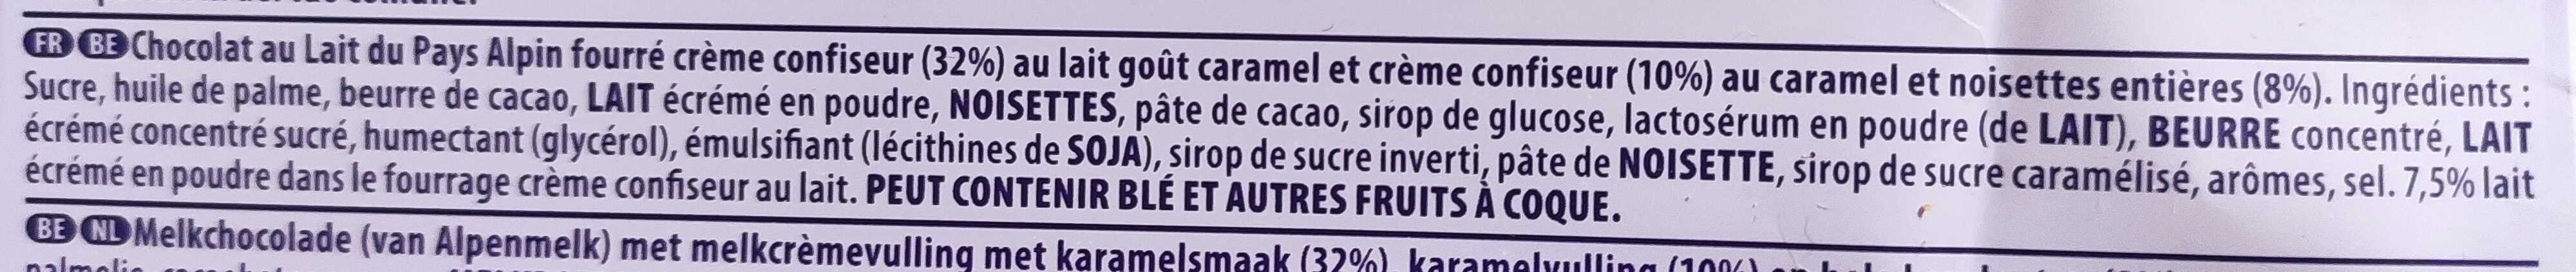 Caramel et Noisettes - Ingredients - fr